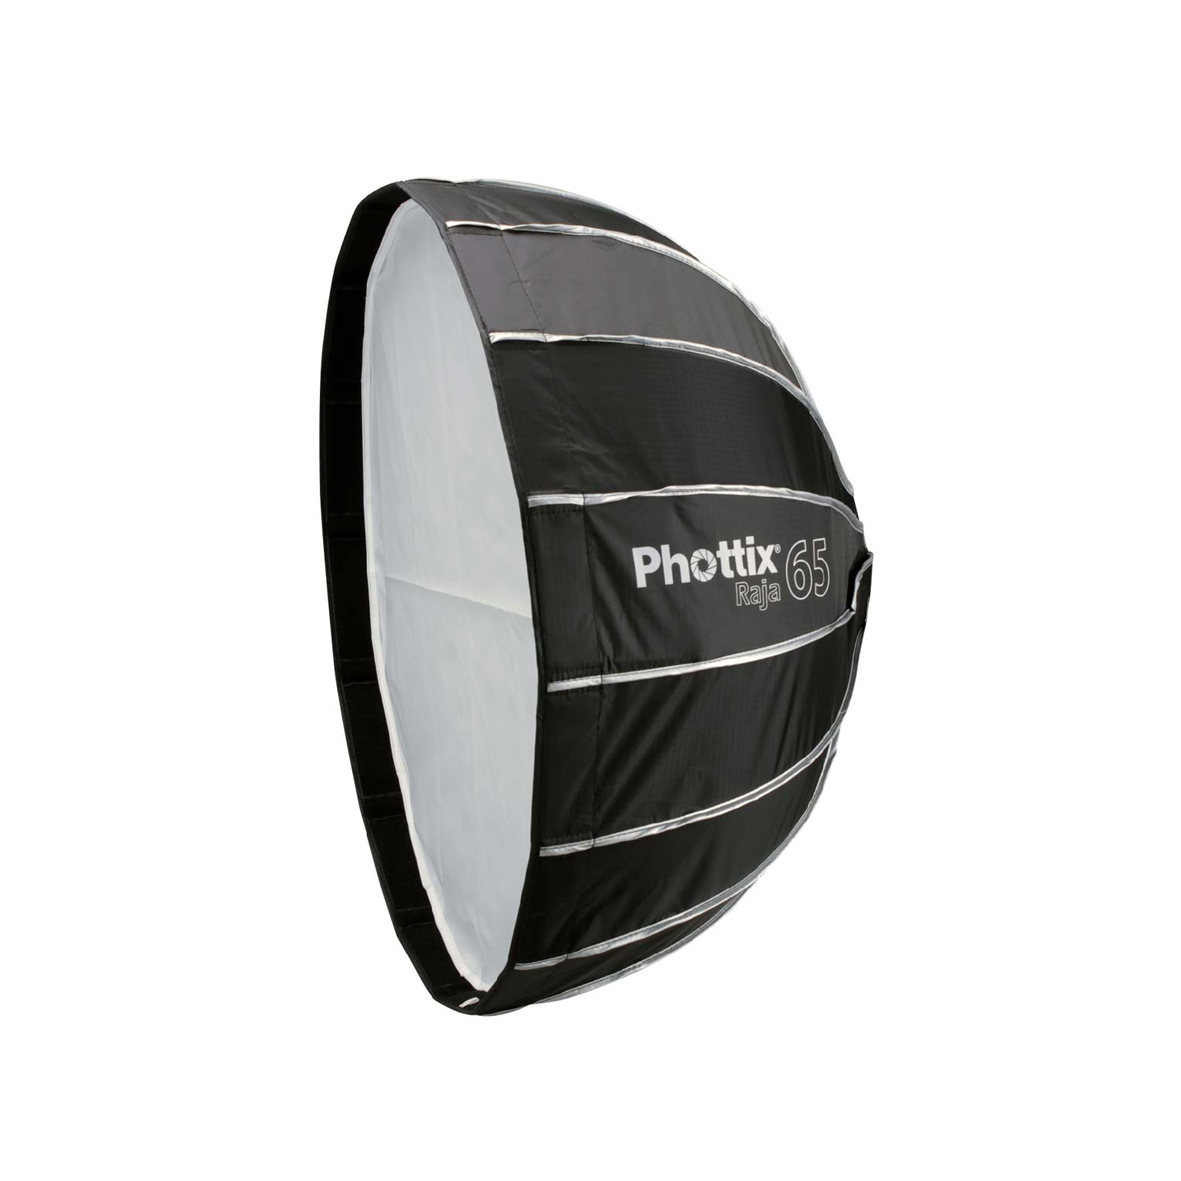 Phottix Raja Quick-Folding Softbox 65cm - Phottix 日本正規総代理店